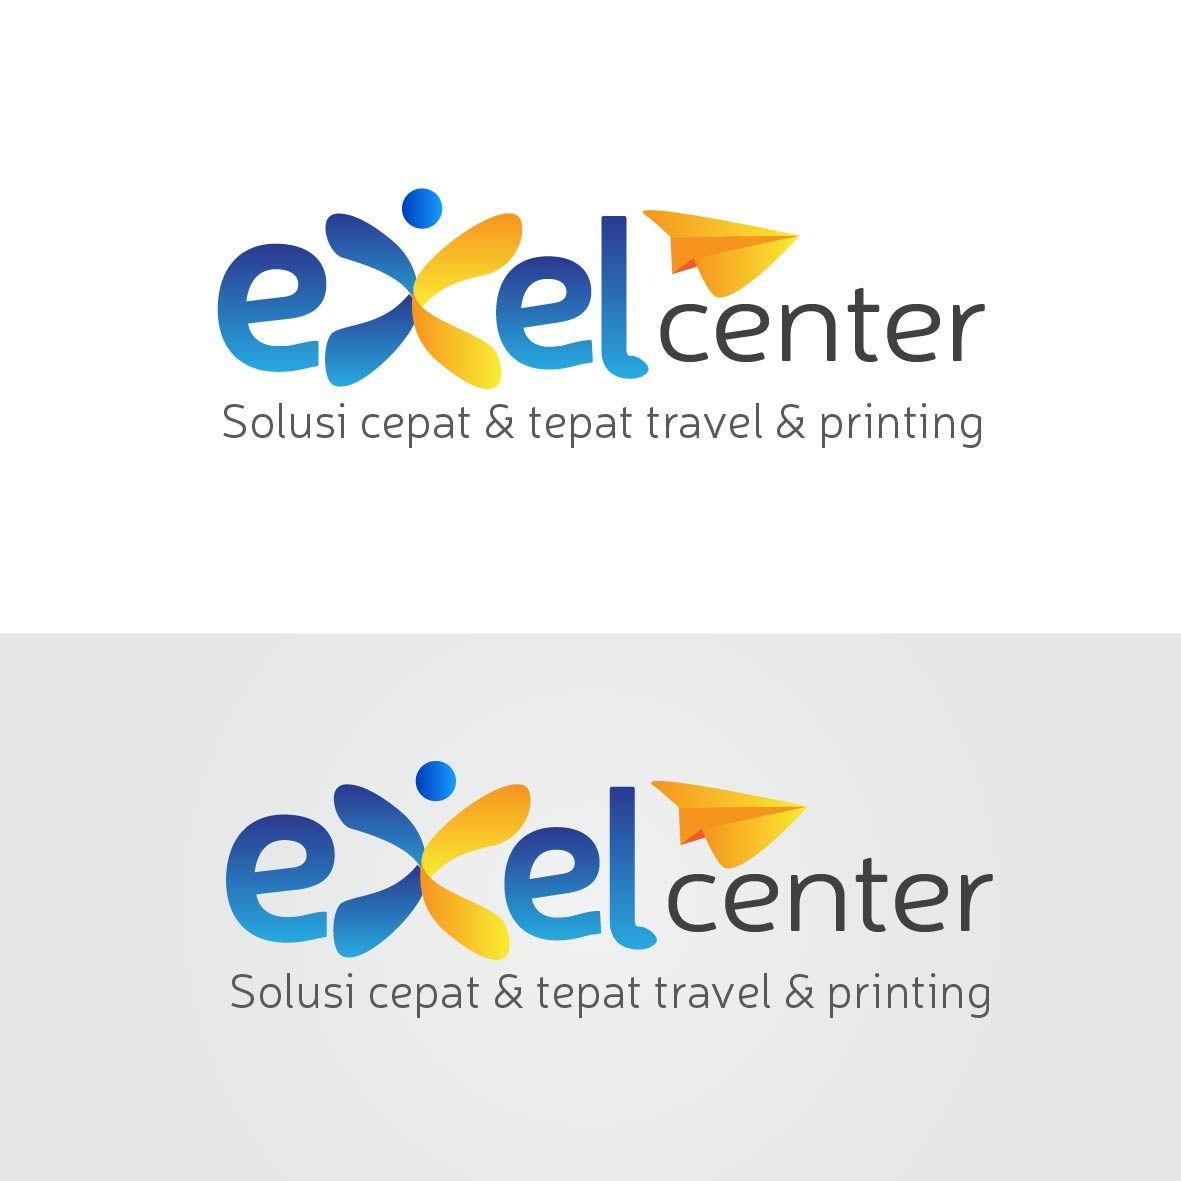 Exel Logo - Gallery. Logo Desain untuk EXEL CENTER